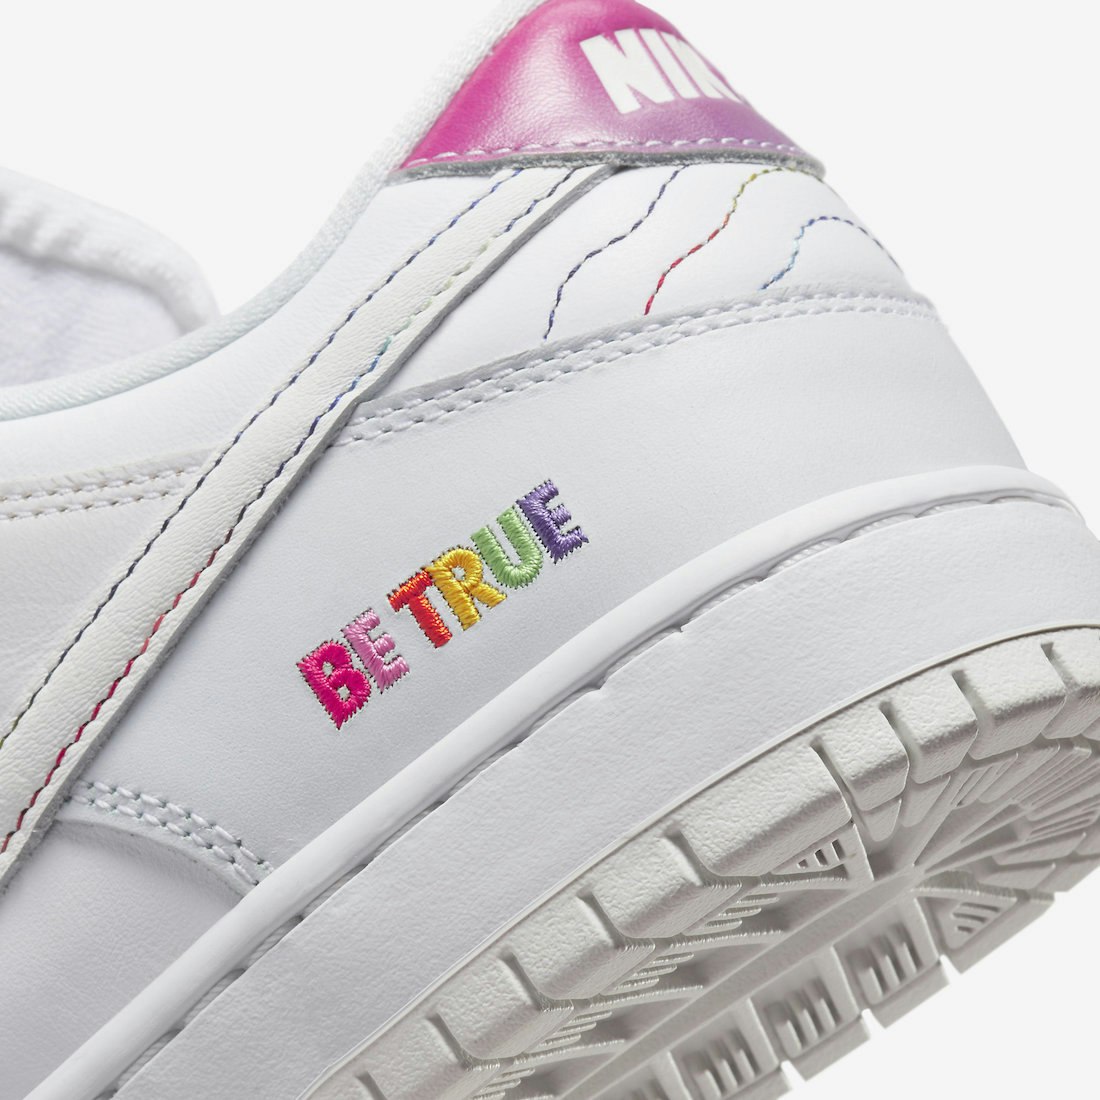 Nike SB Dunk Low "Be True"